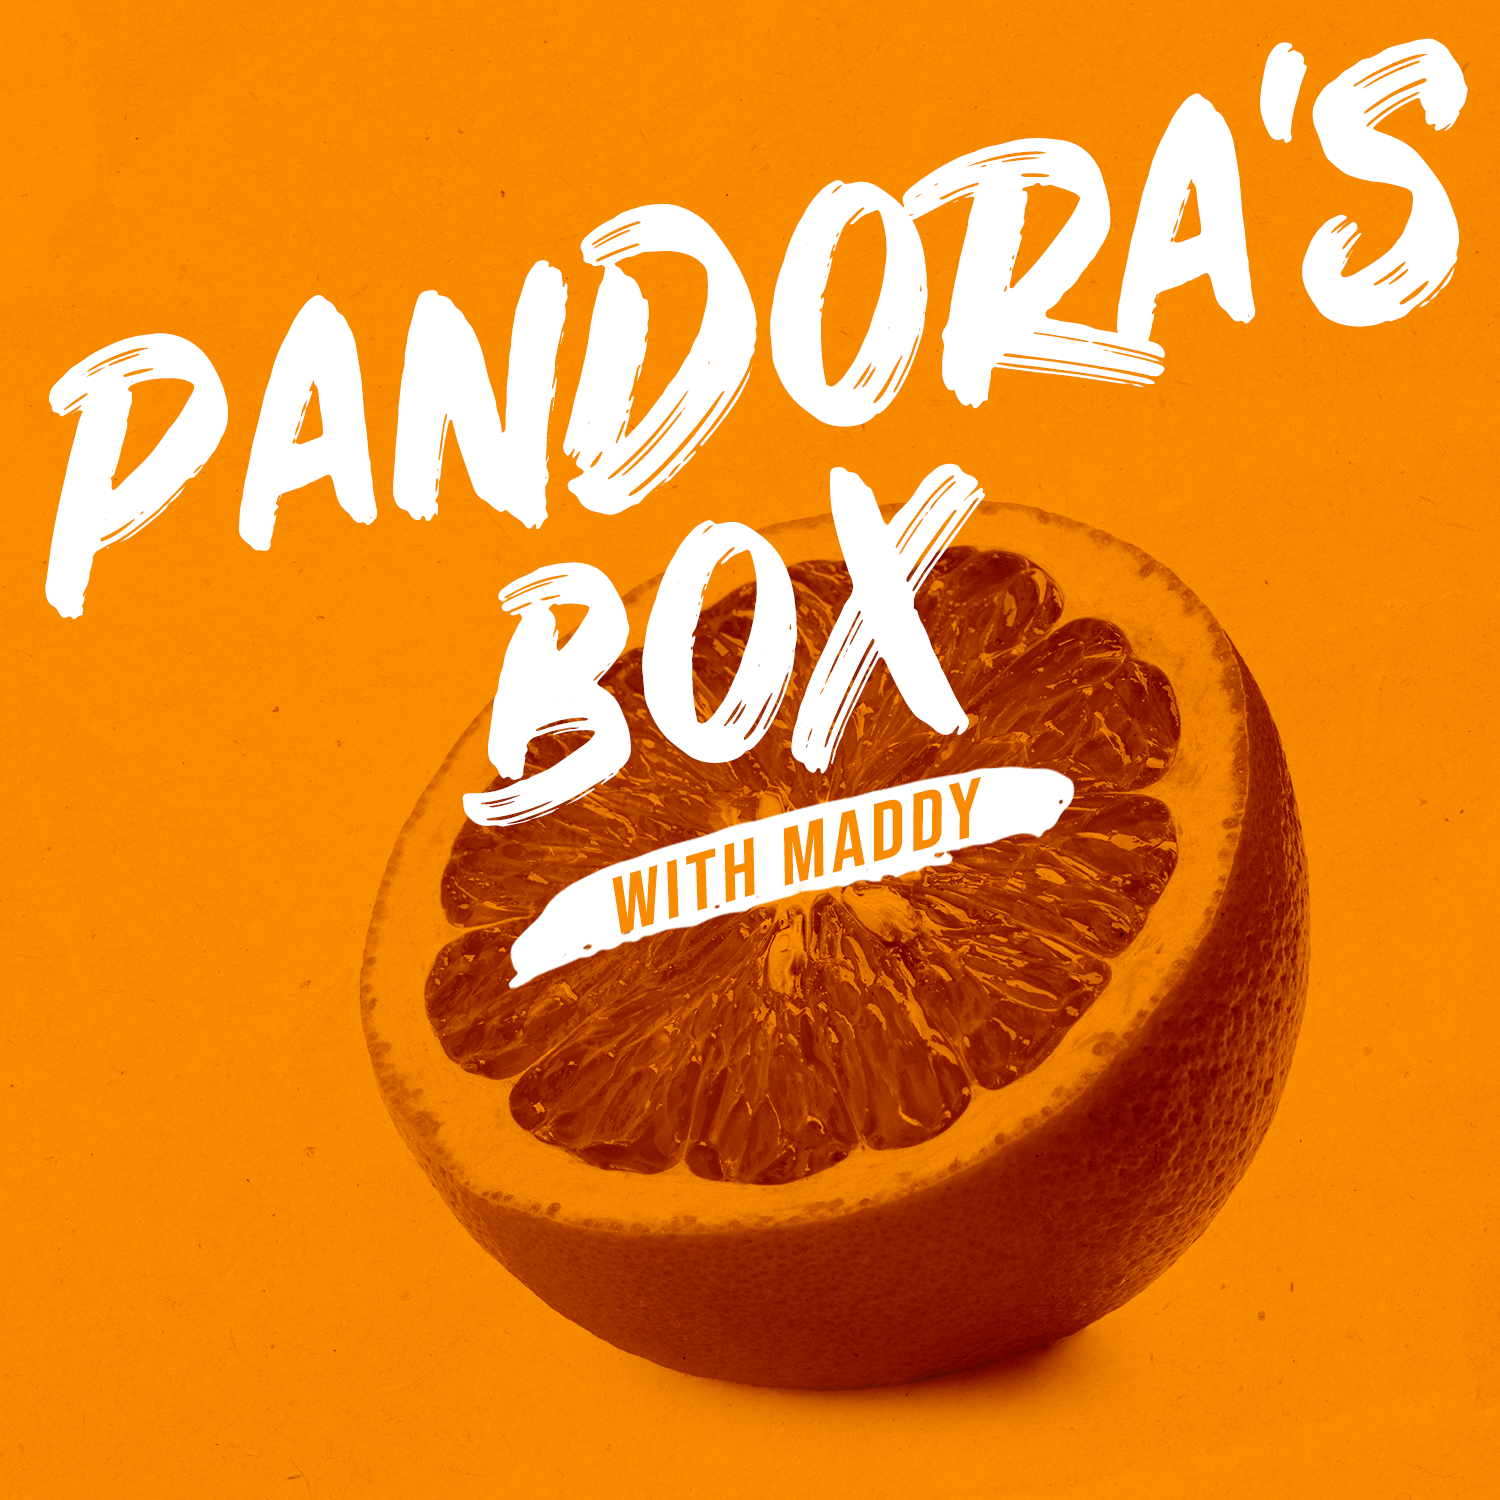 Pandora's Box with Maddy